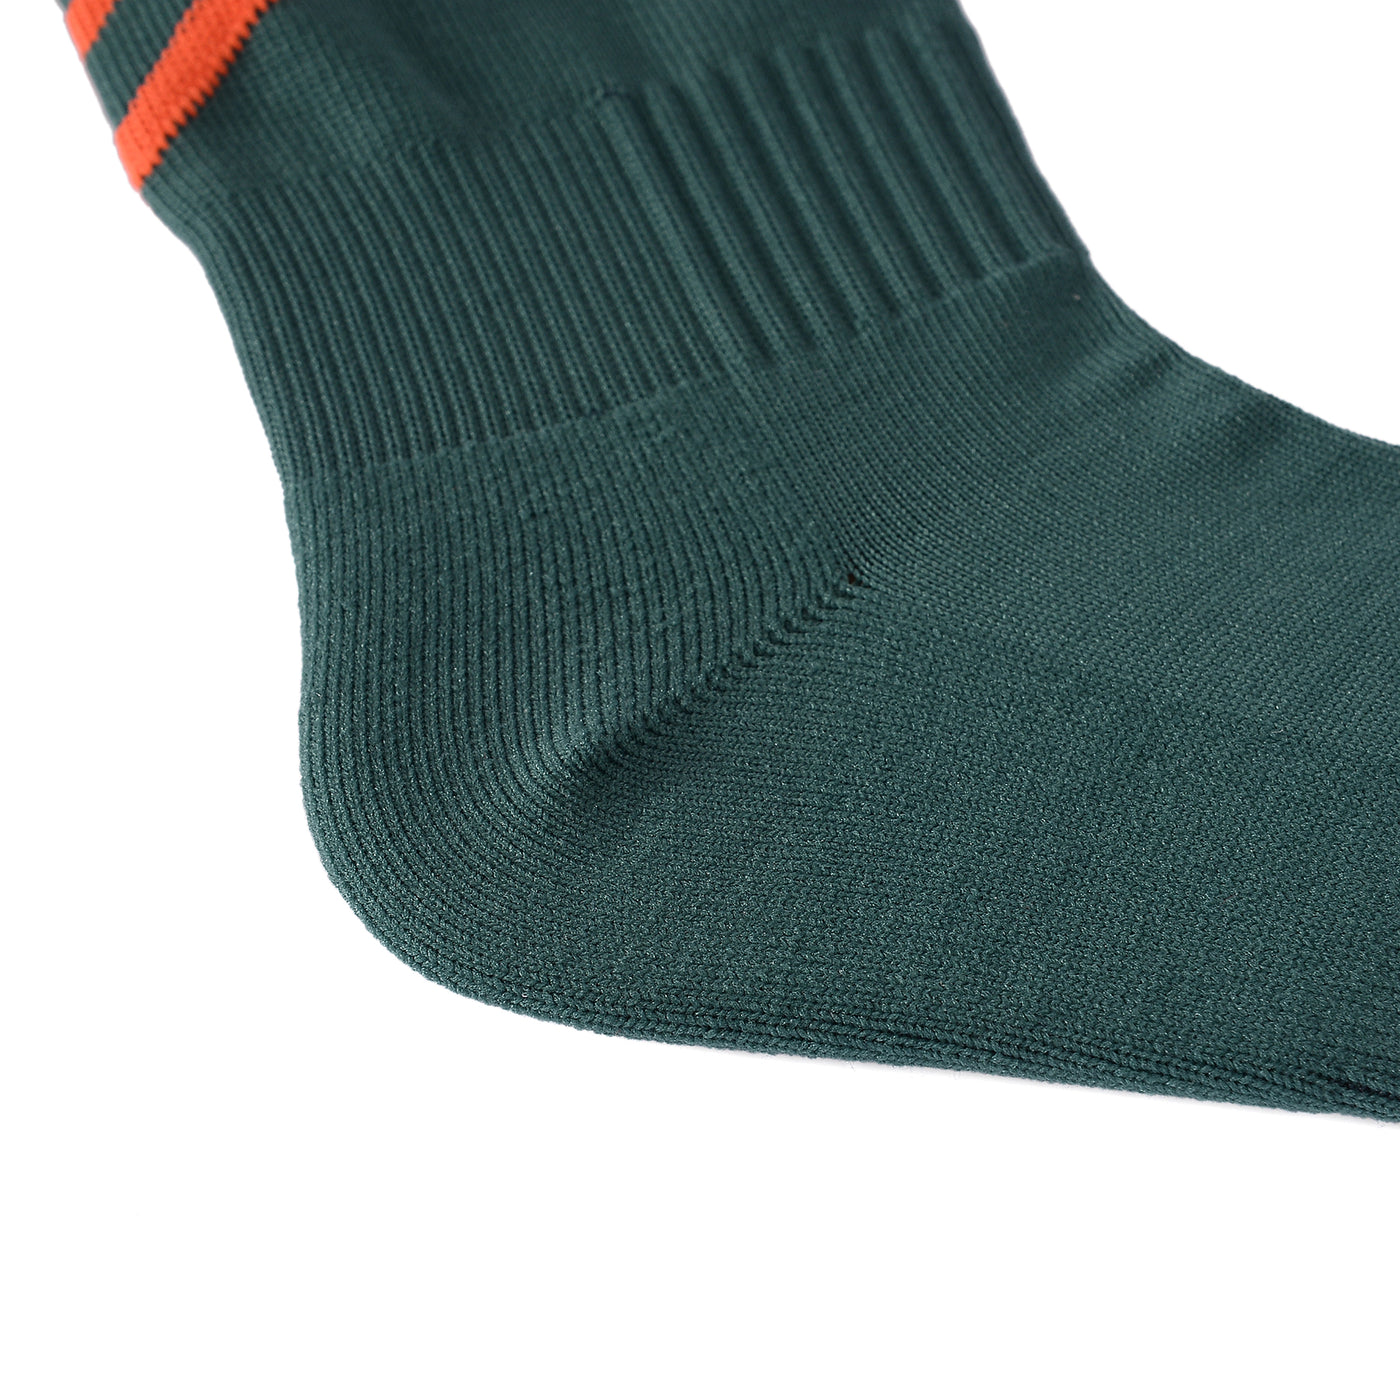 8 Pairs Laulax Coolmax Professional Football Socks